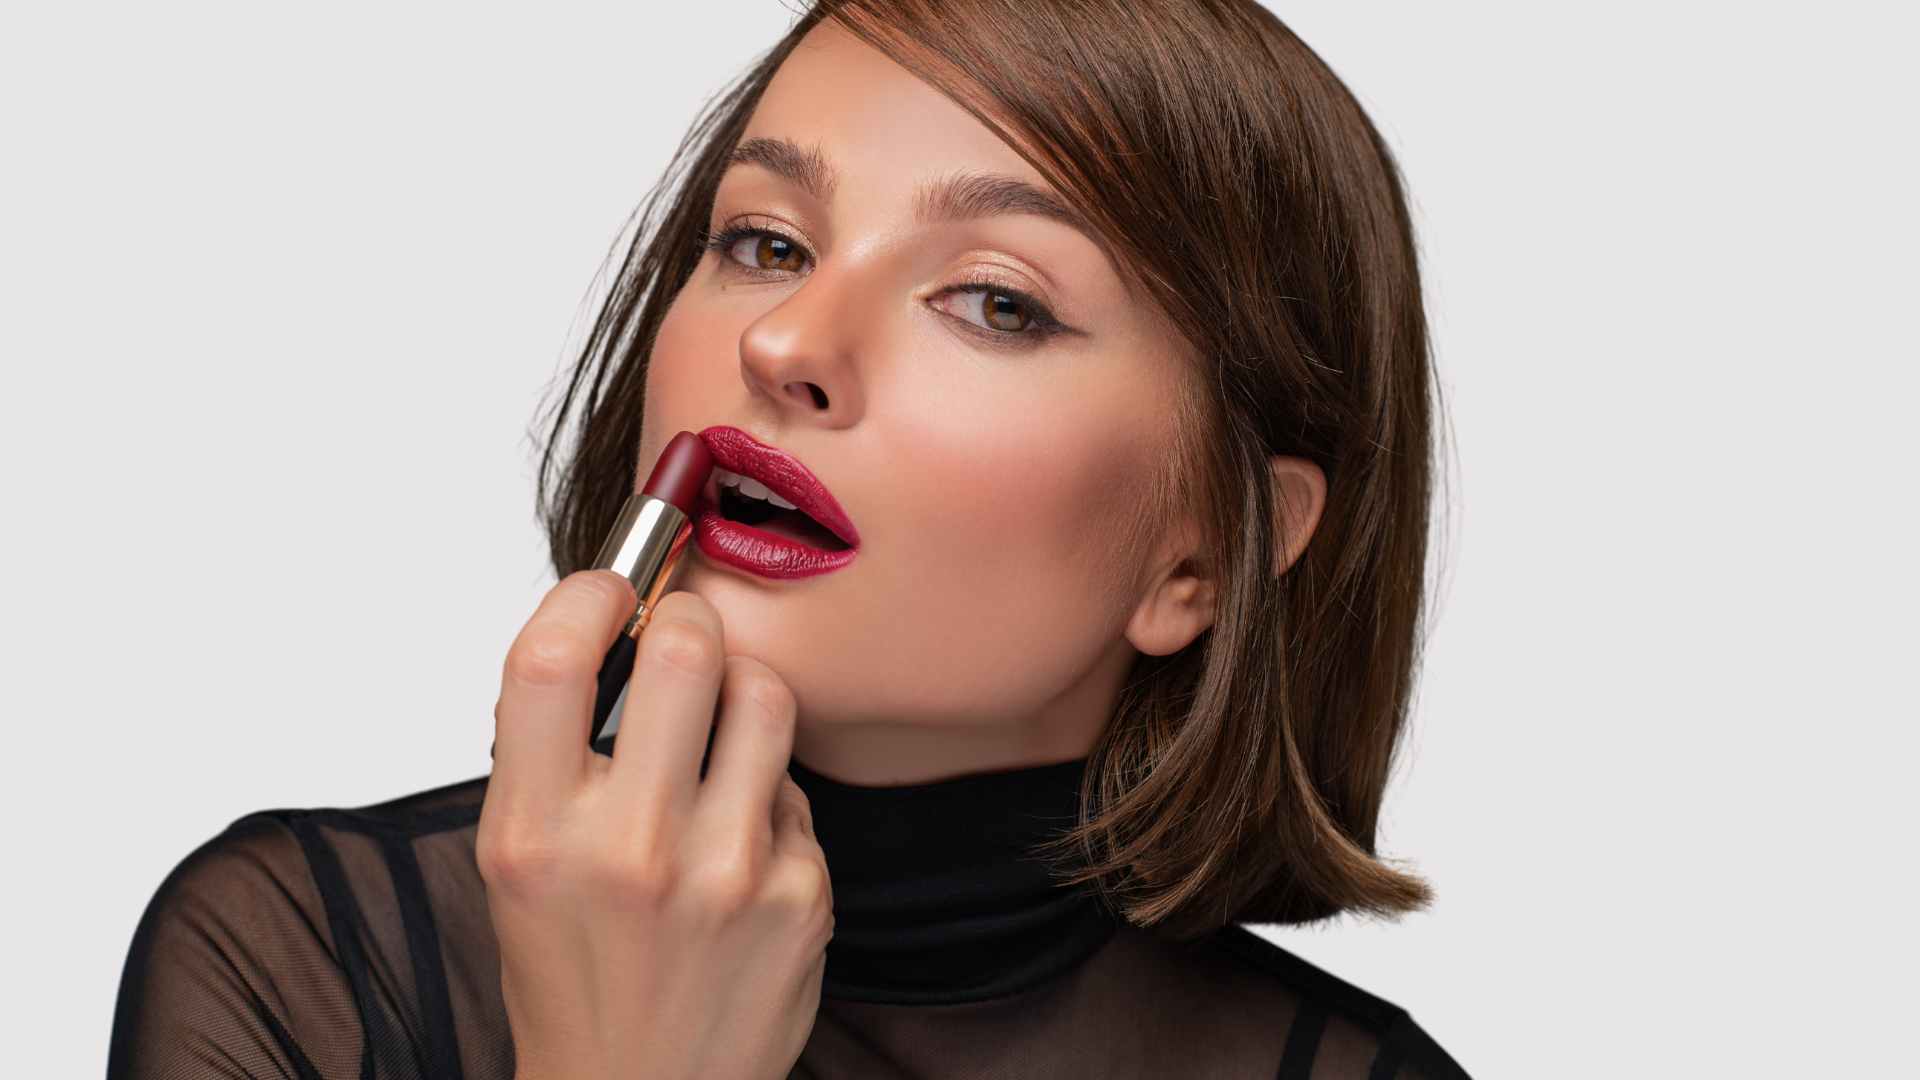 Female with sleek short bob haircut applying lipstick